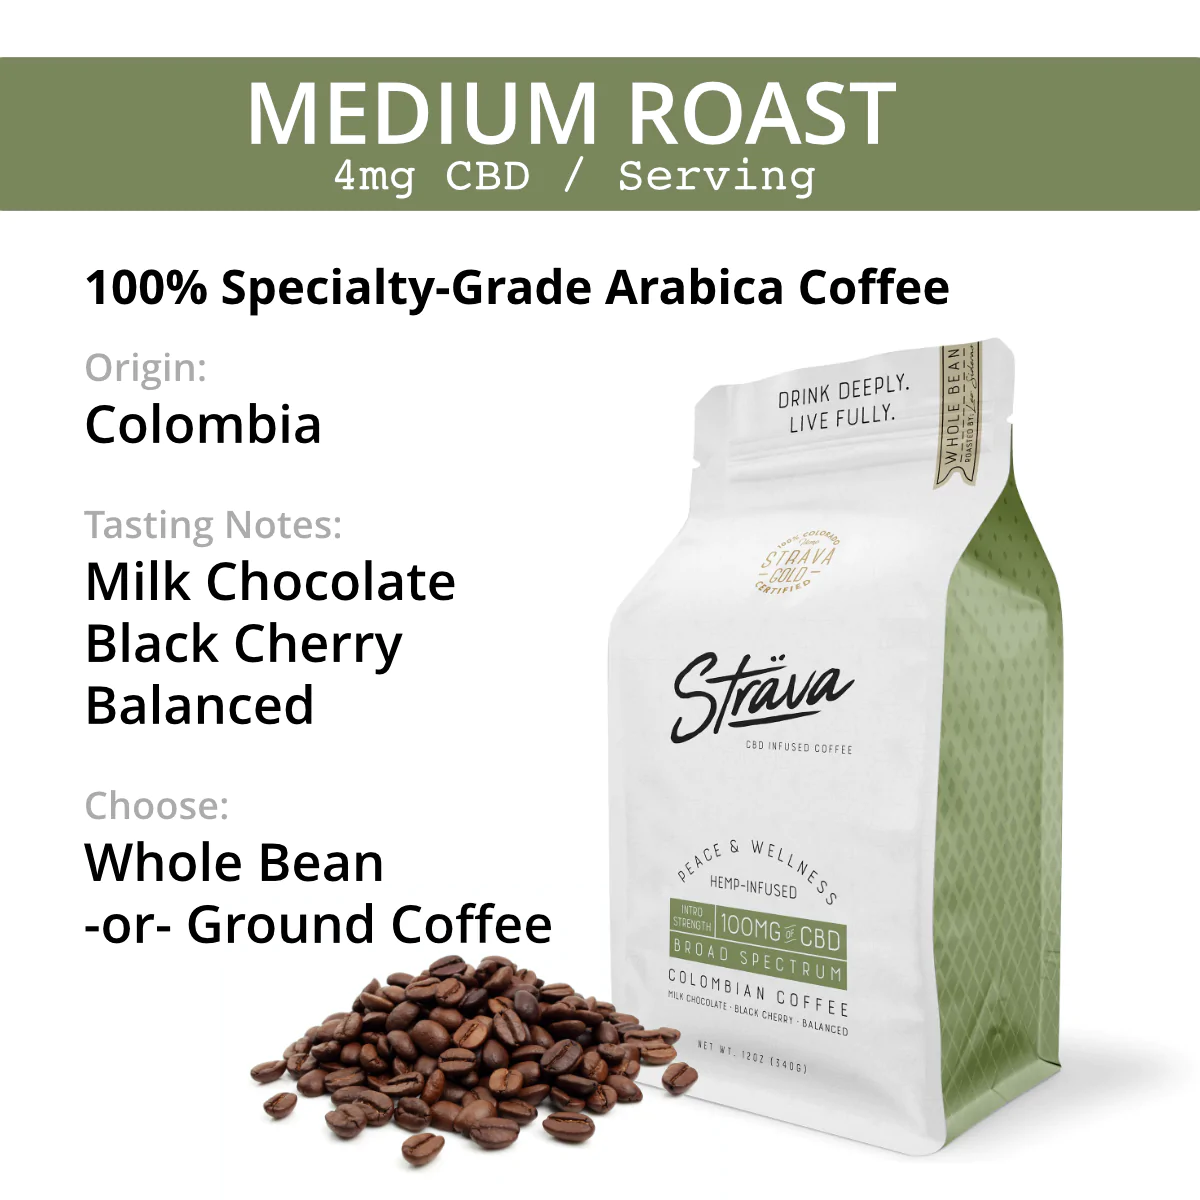 Delta Ground Roasted Coffee